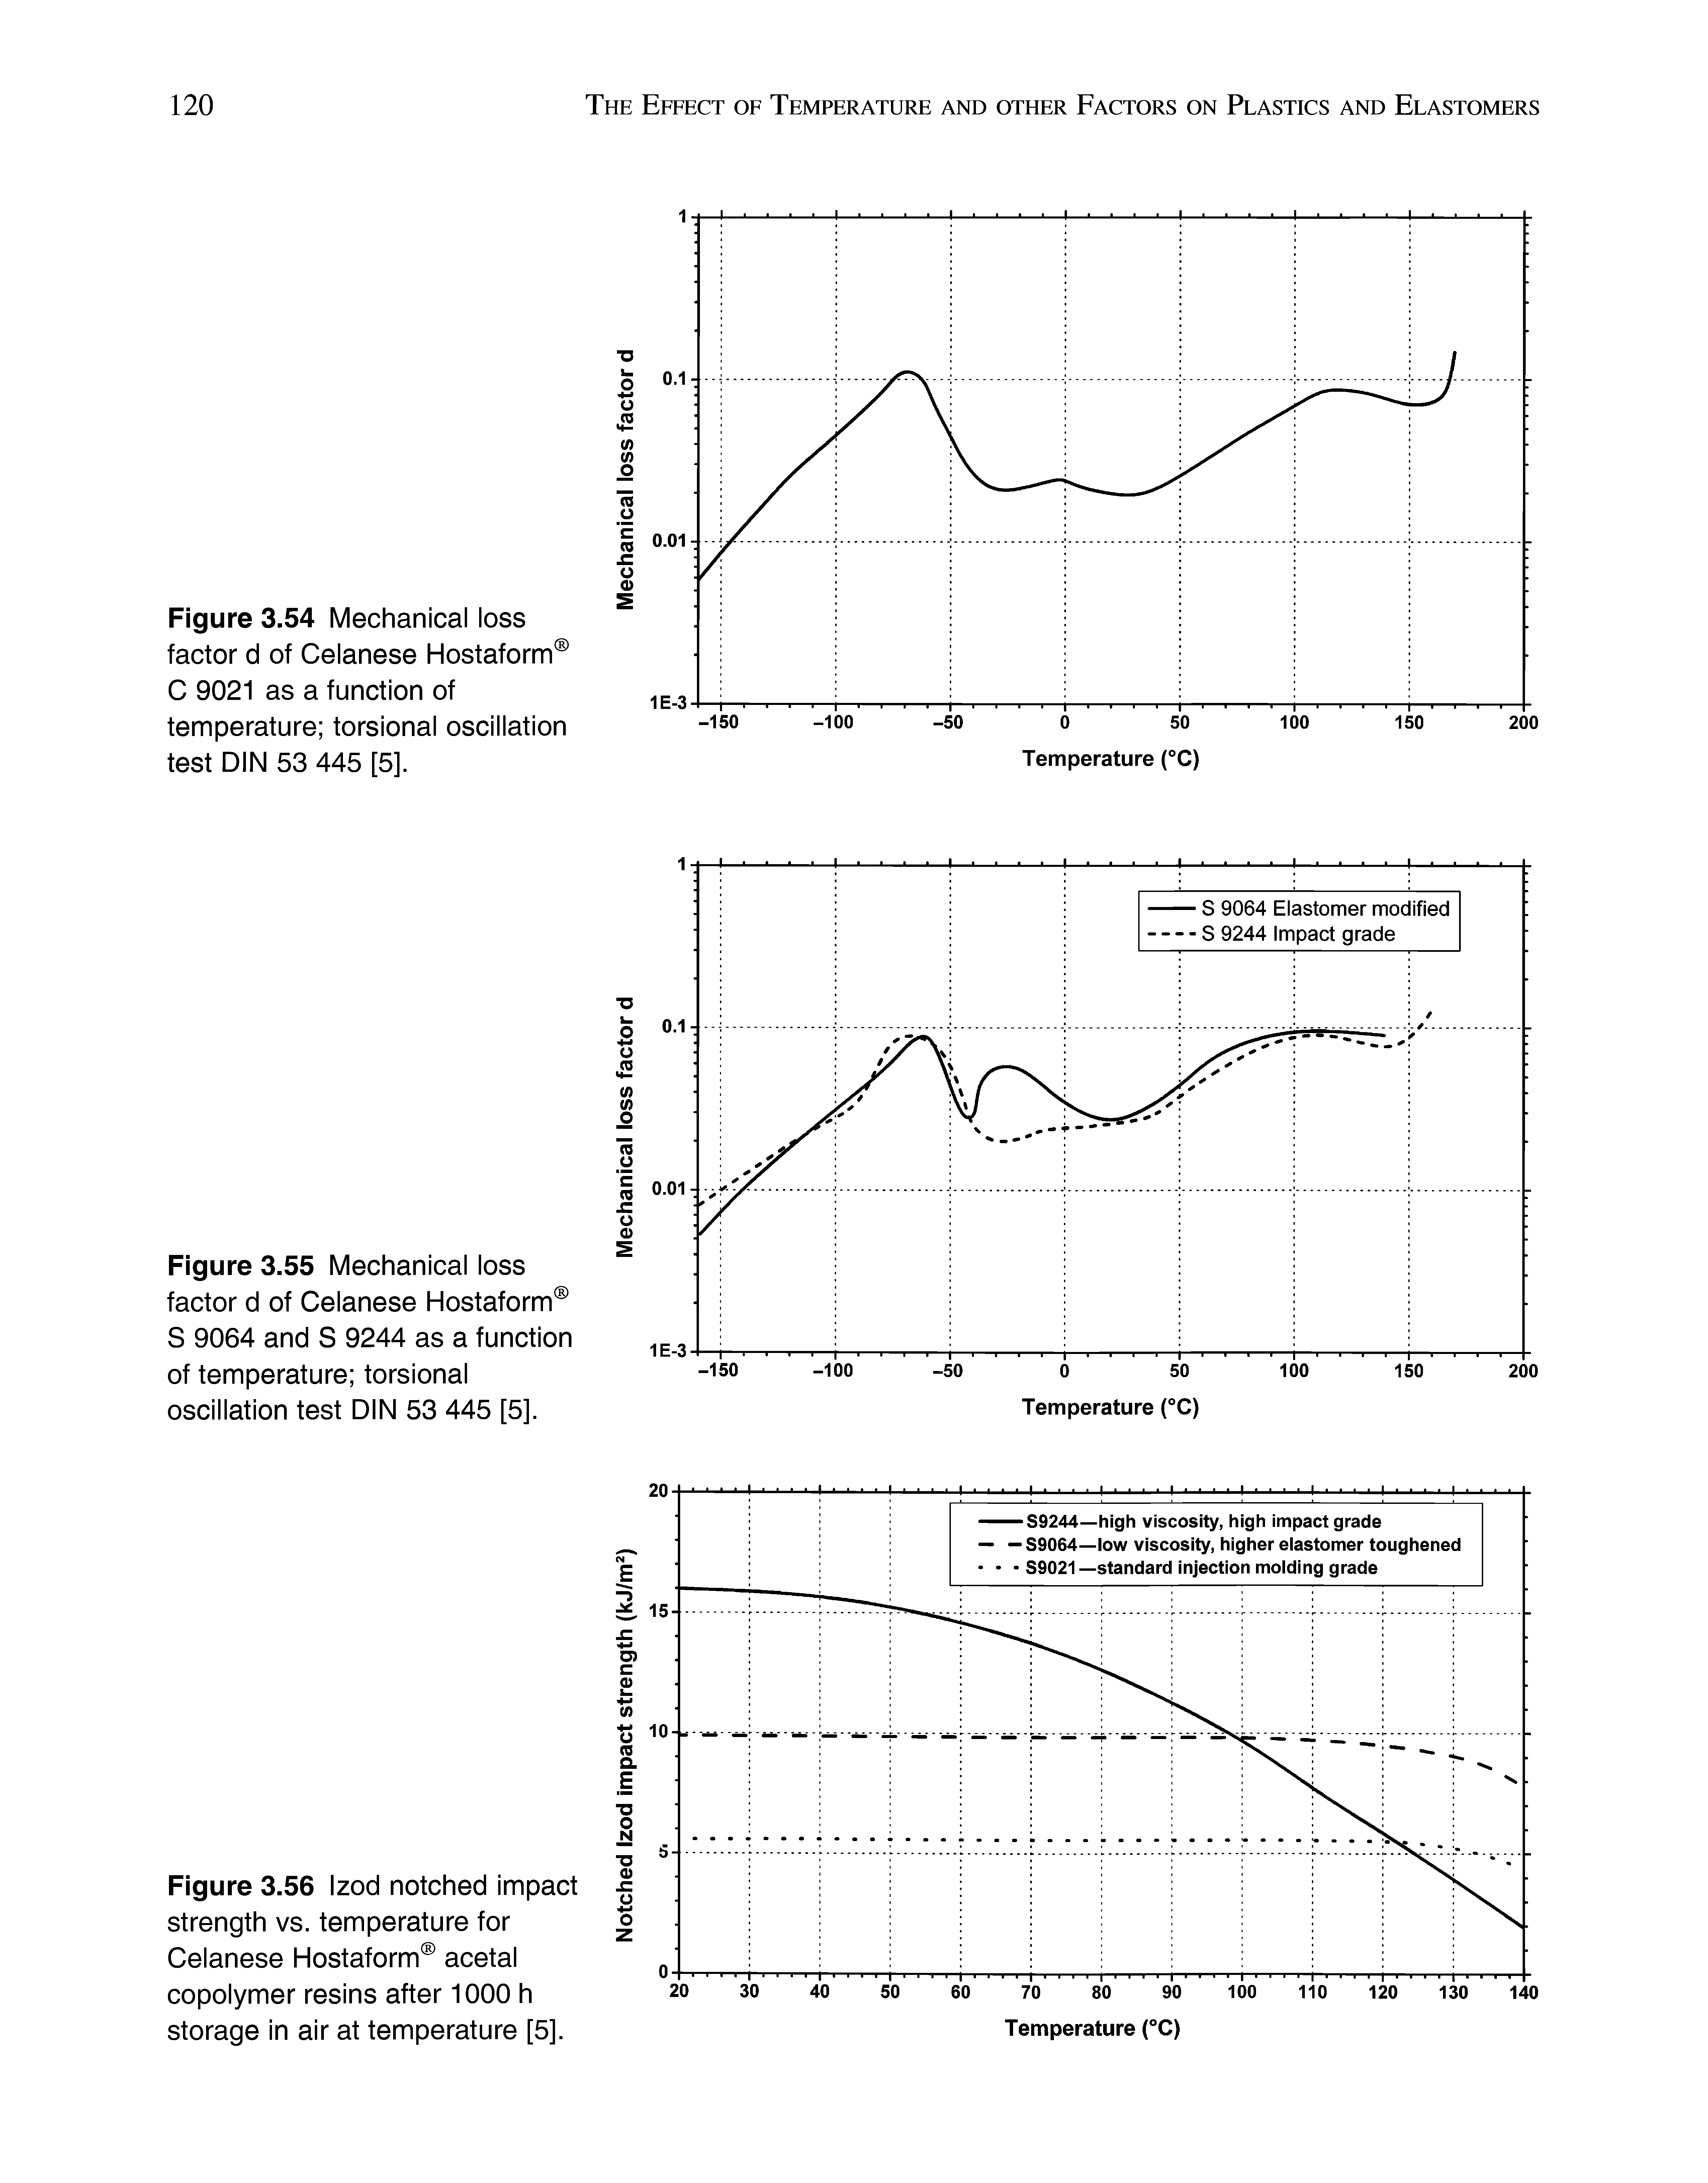 Figure 3.54 Mechanical loss factor d of Celanese Hostaform C 9021 as a function of temperature torsional oscillation test DIN 53 445 [5].